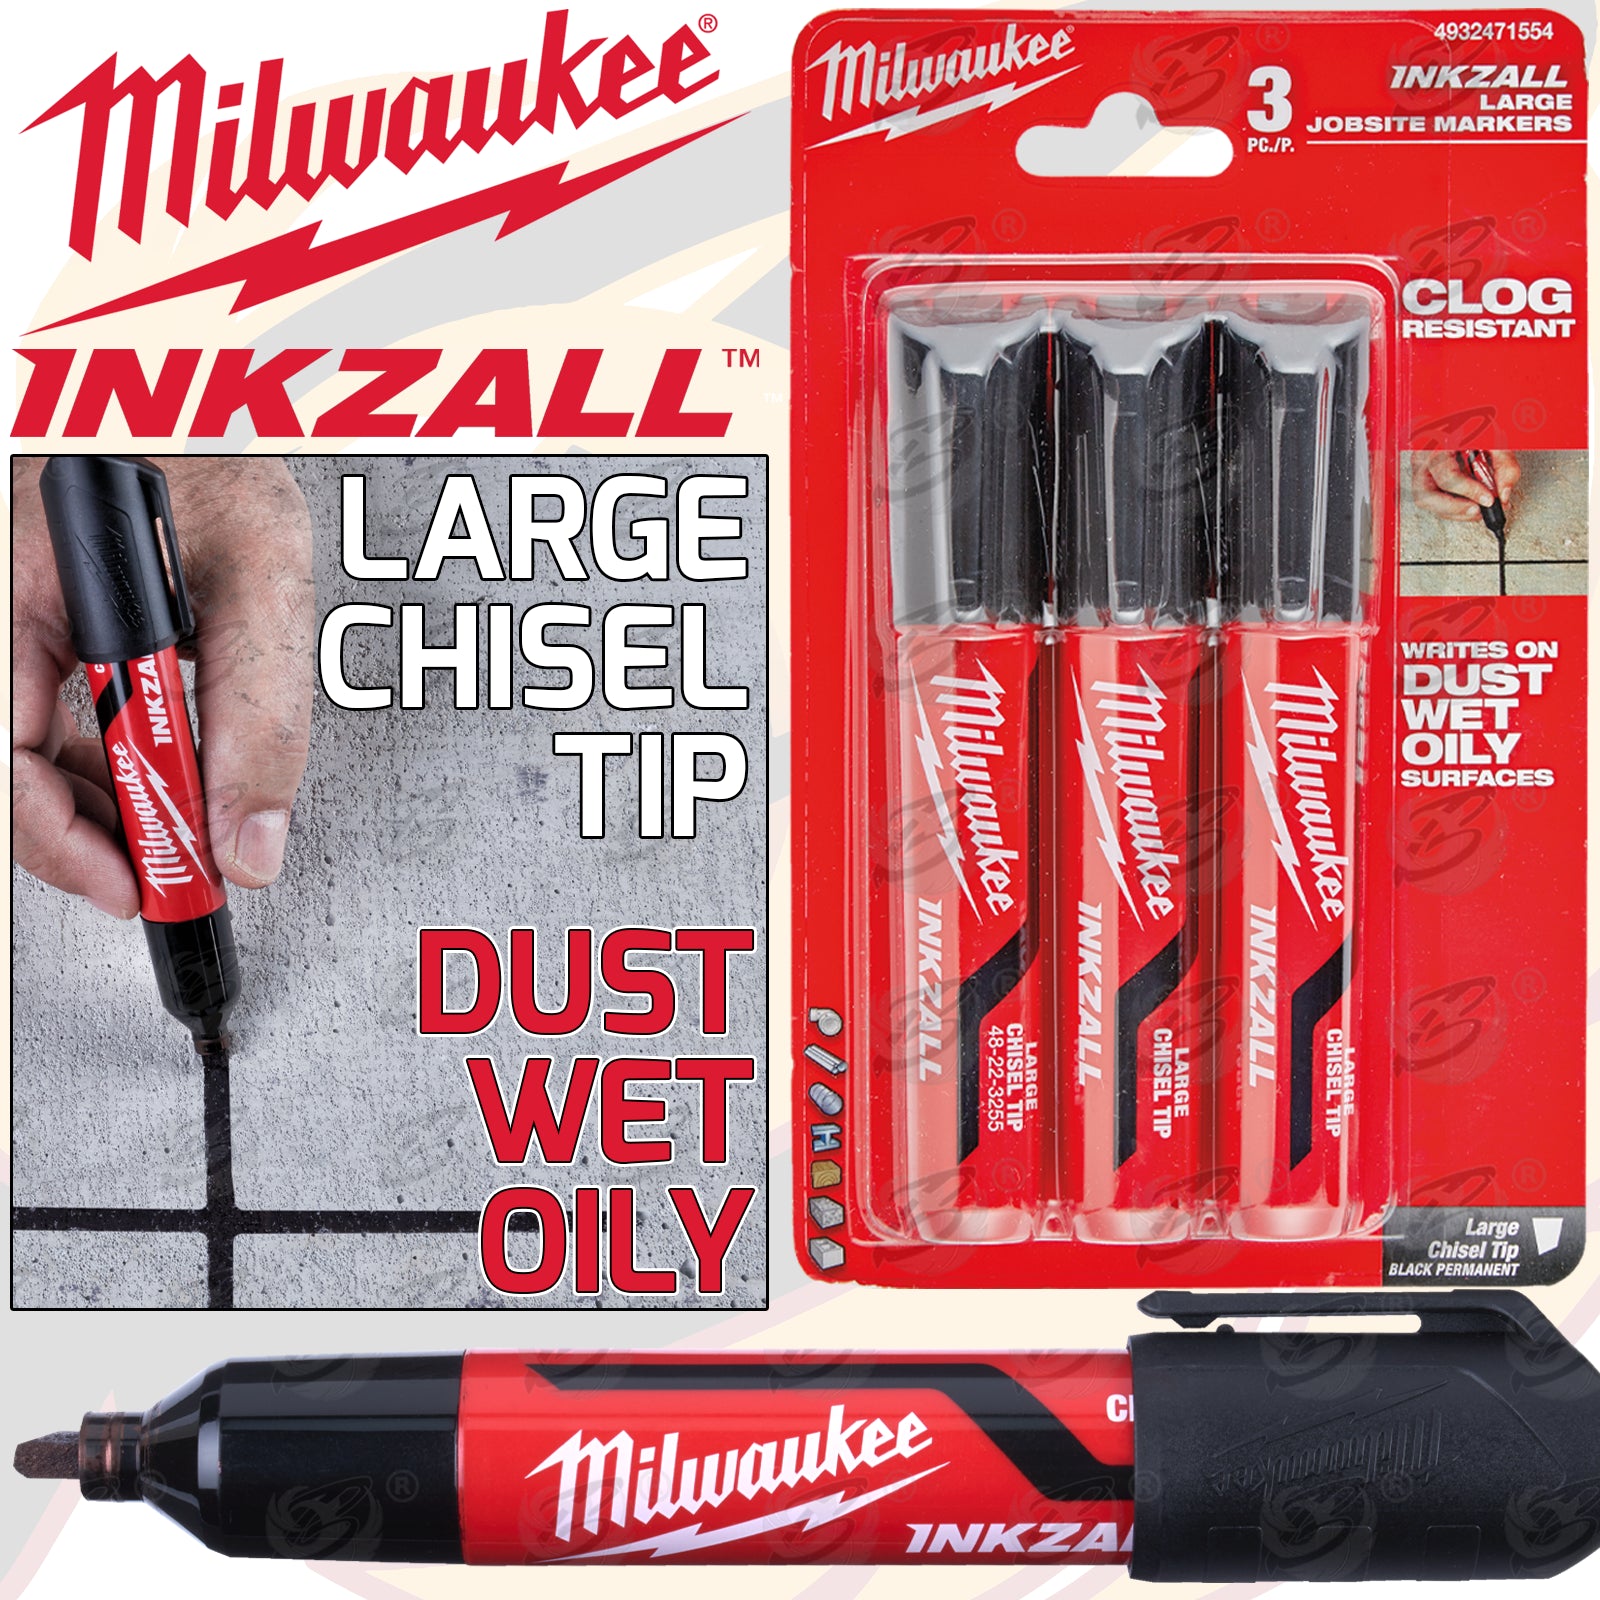 Reviews for Milwaukee INKZALL Black Chisel Tip Jobsite Permanent Marker